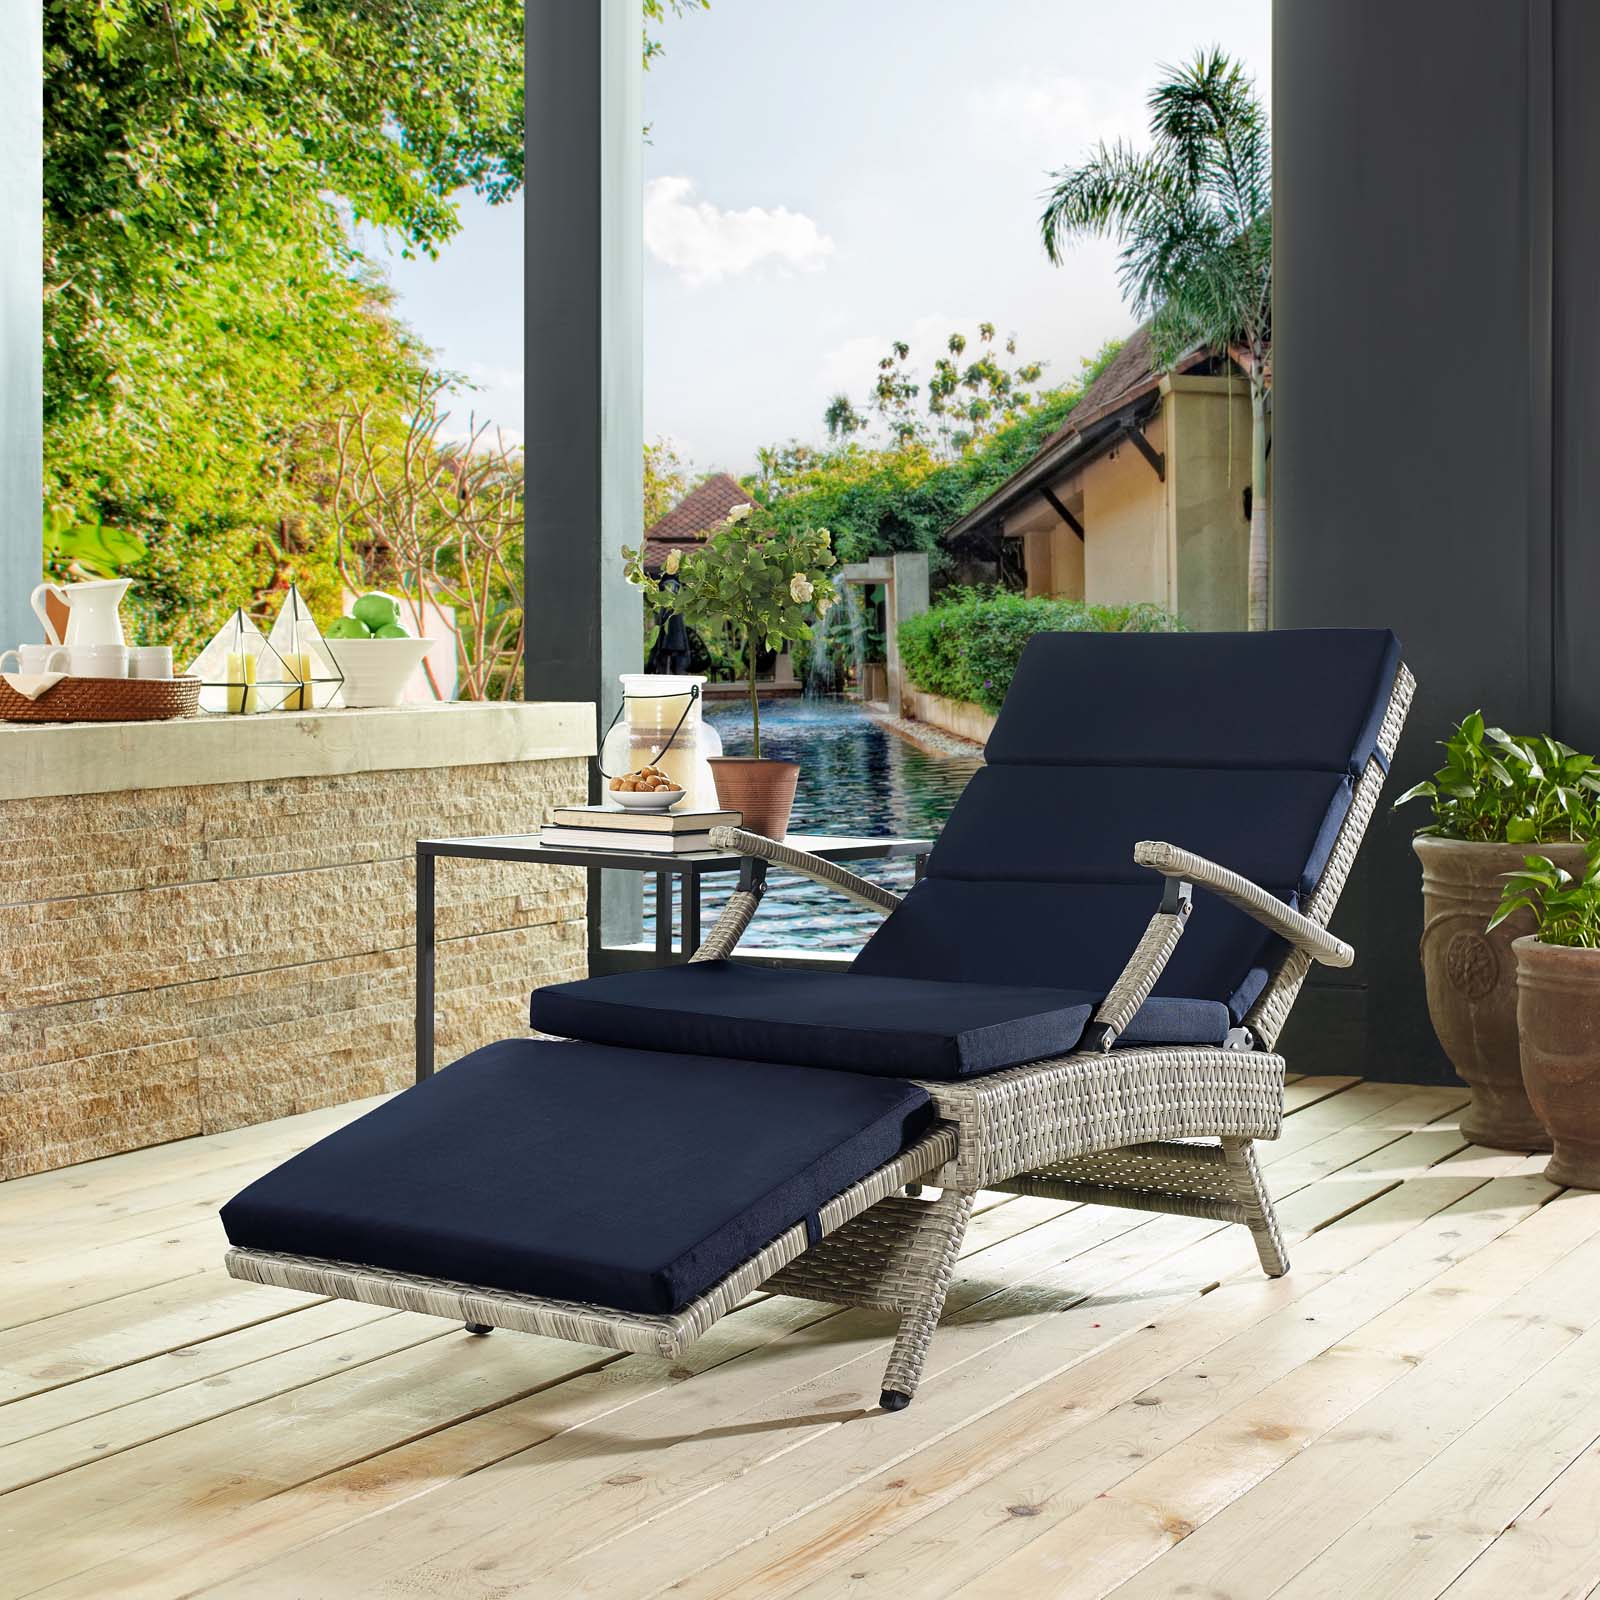 Contemporary Modern Urban Designer Outdoor Patio Balcony Garden Furniture Lounge Chair Chaise, Fabric Rattan Wicker, Navy Blue - image 2 of 9